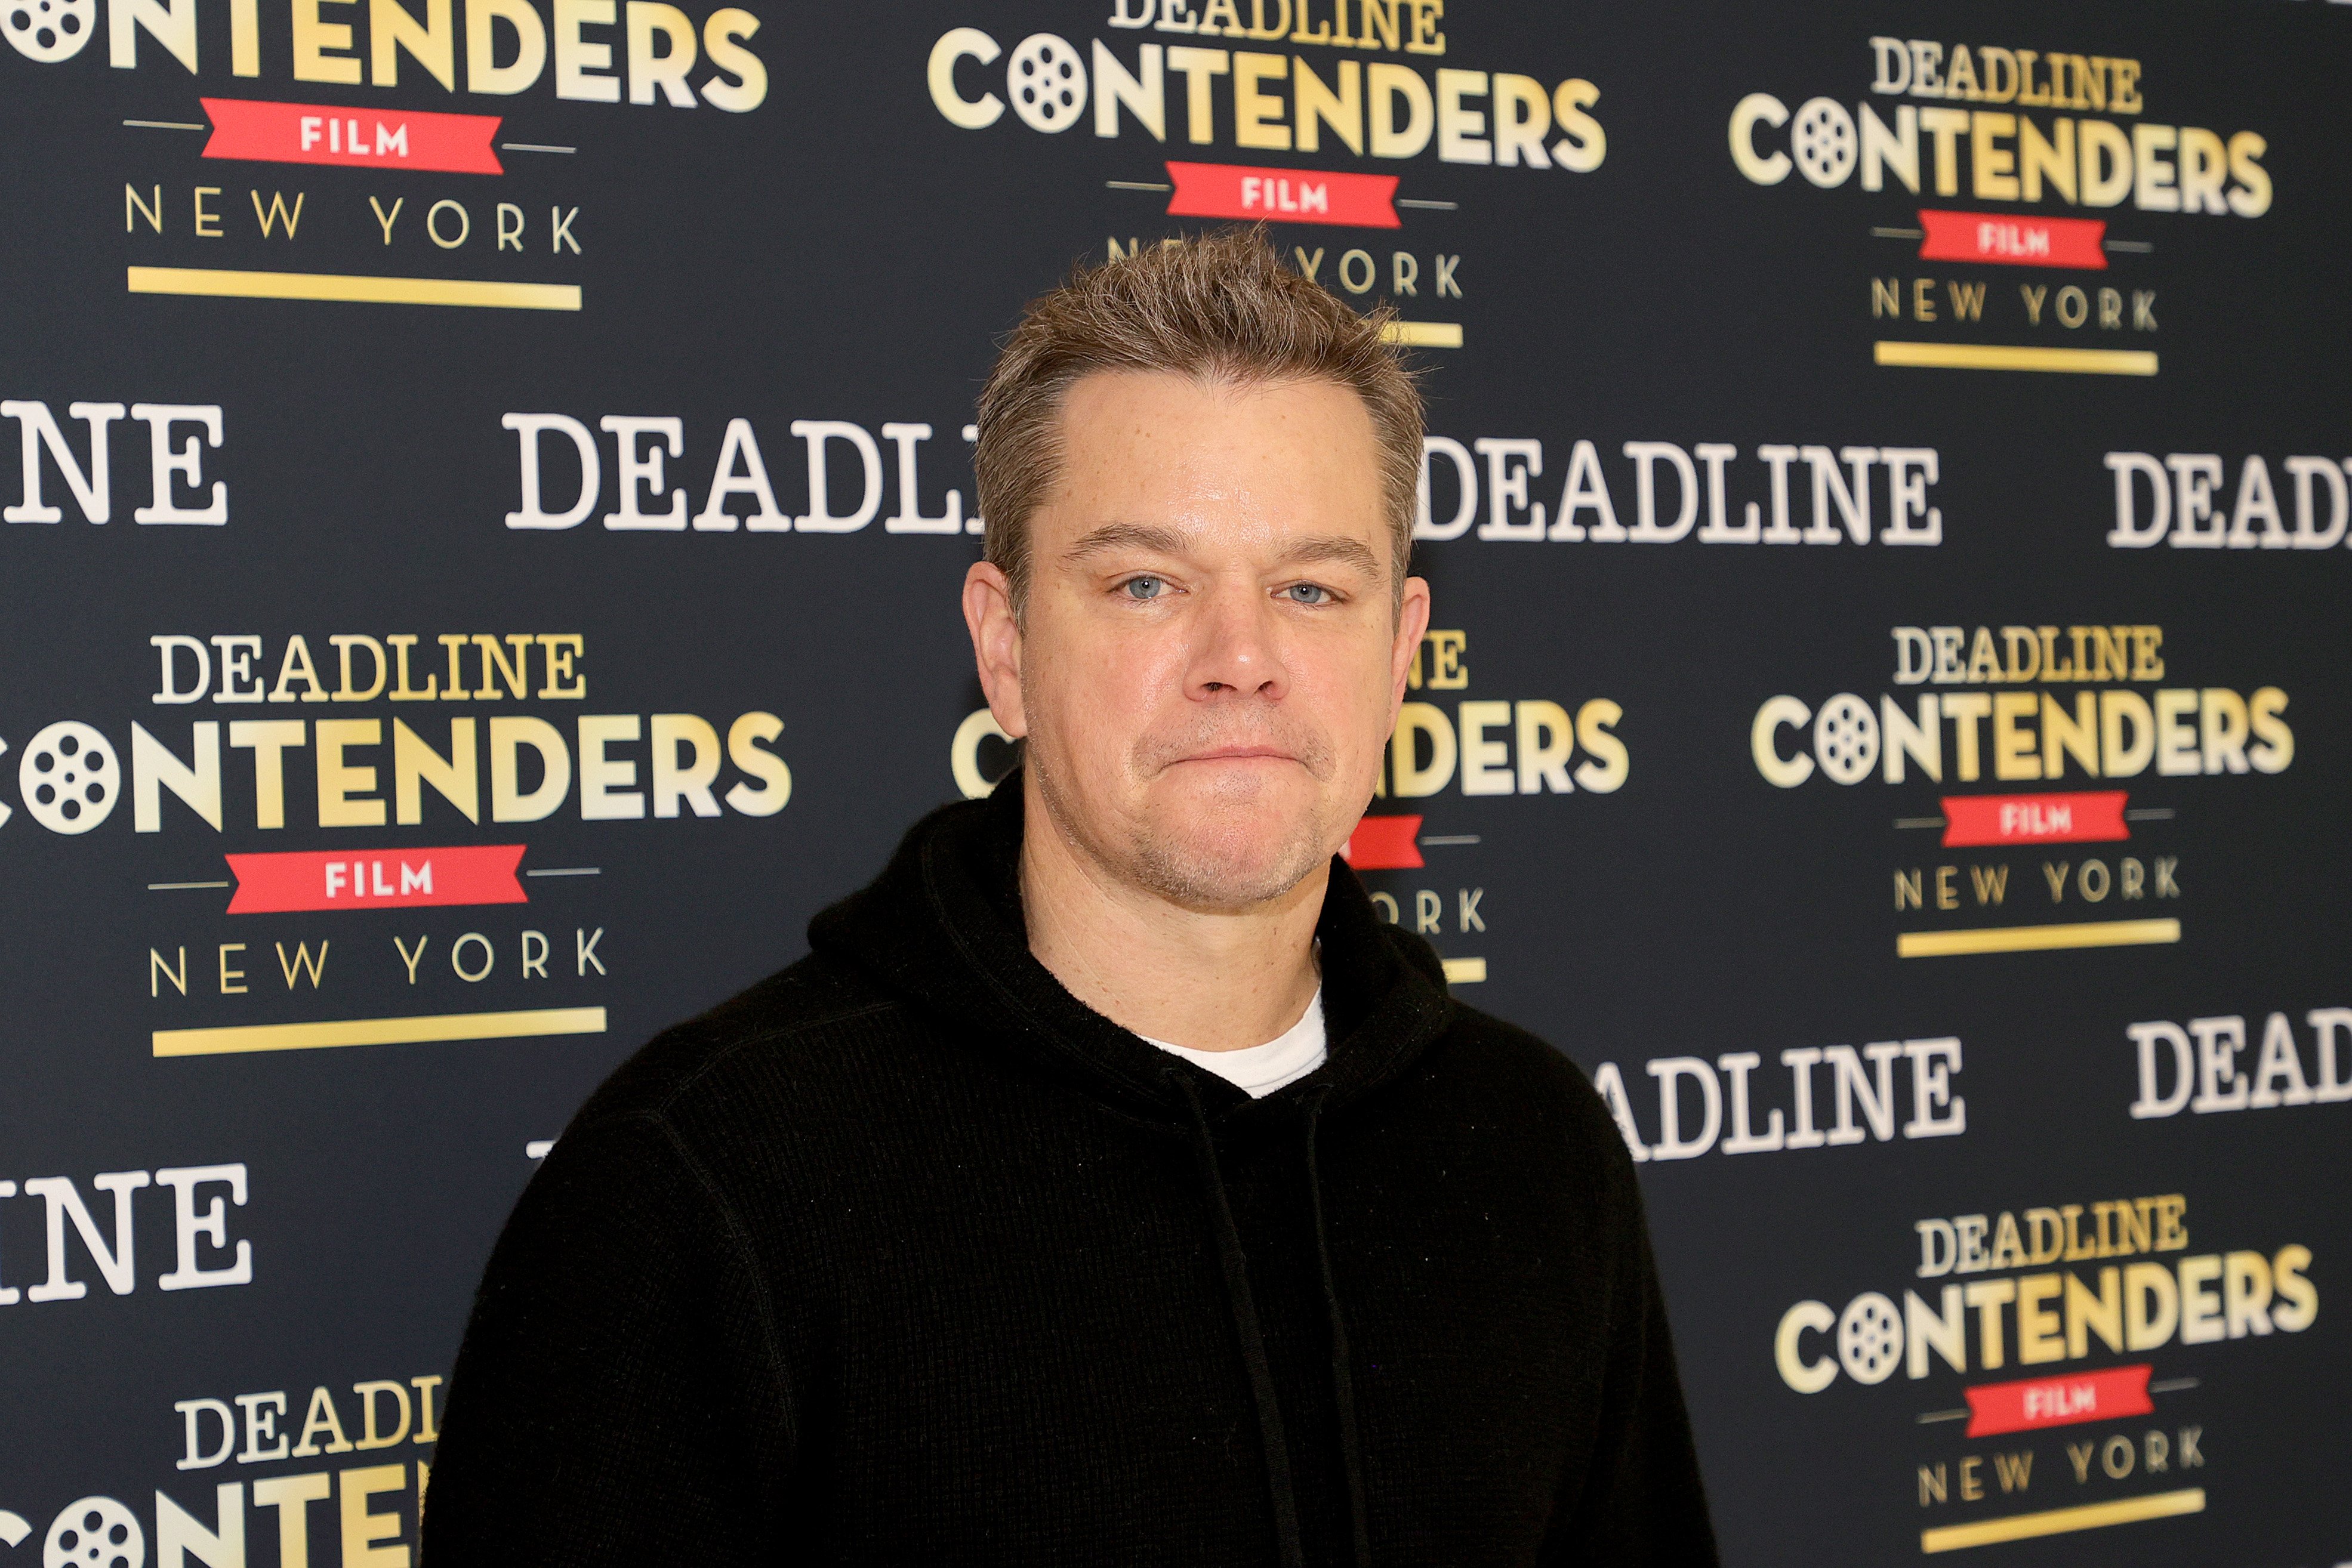 Matt Damon, who owns a Brooklyn penthouse, attends Deadline Contenders Film in New York City